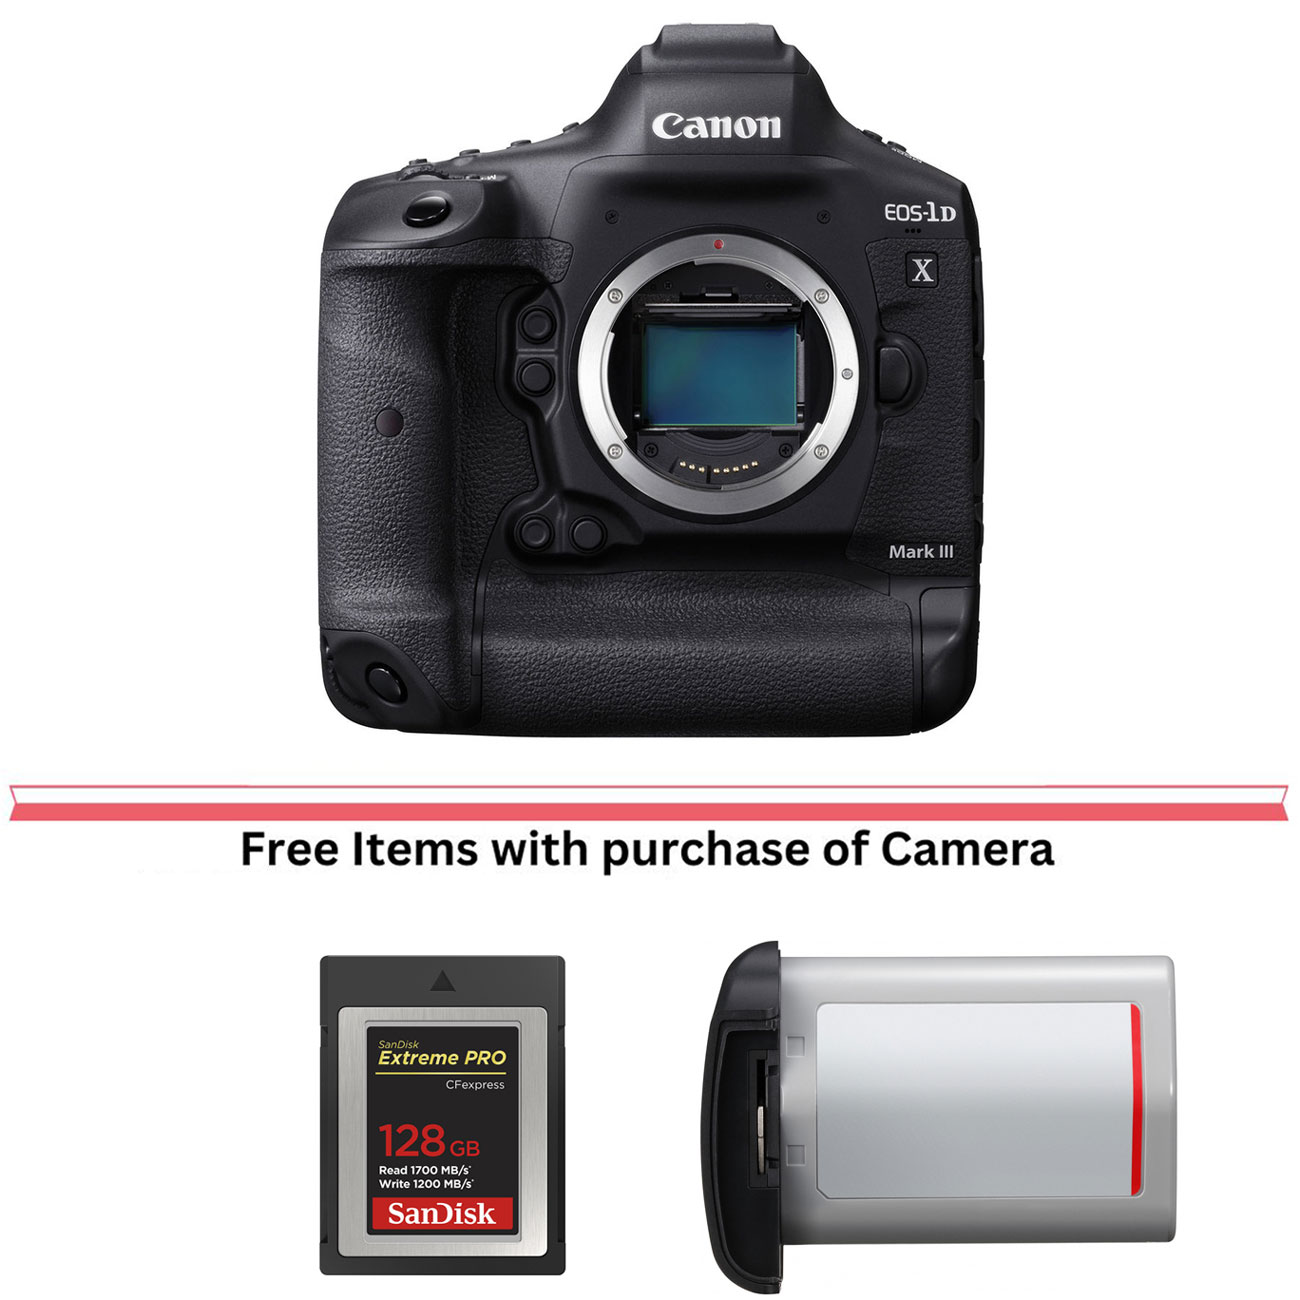 Canon EOS-1D X Mark III Digital SLR Camera Body